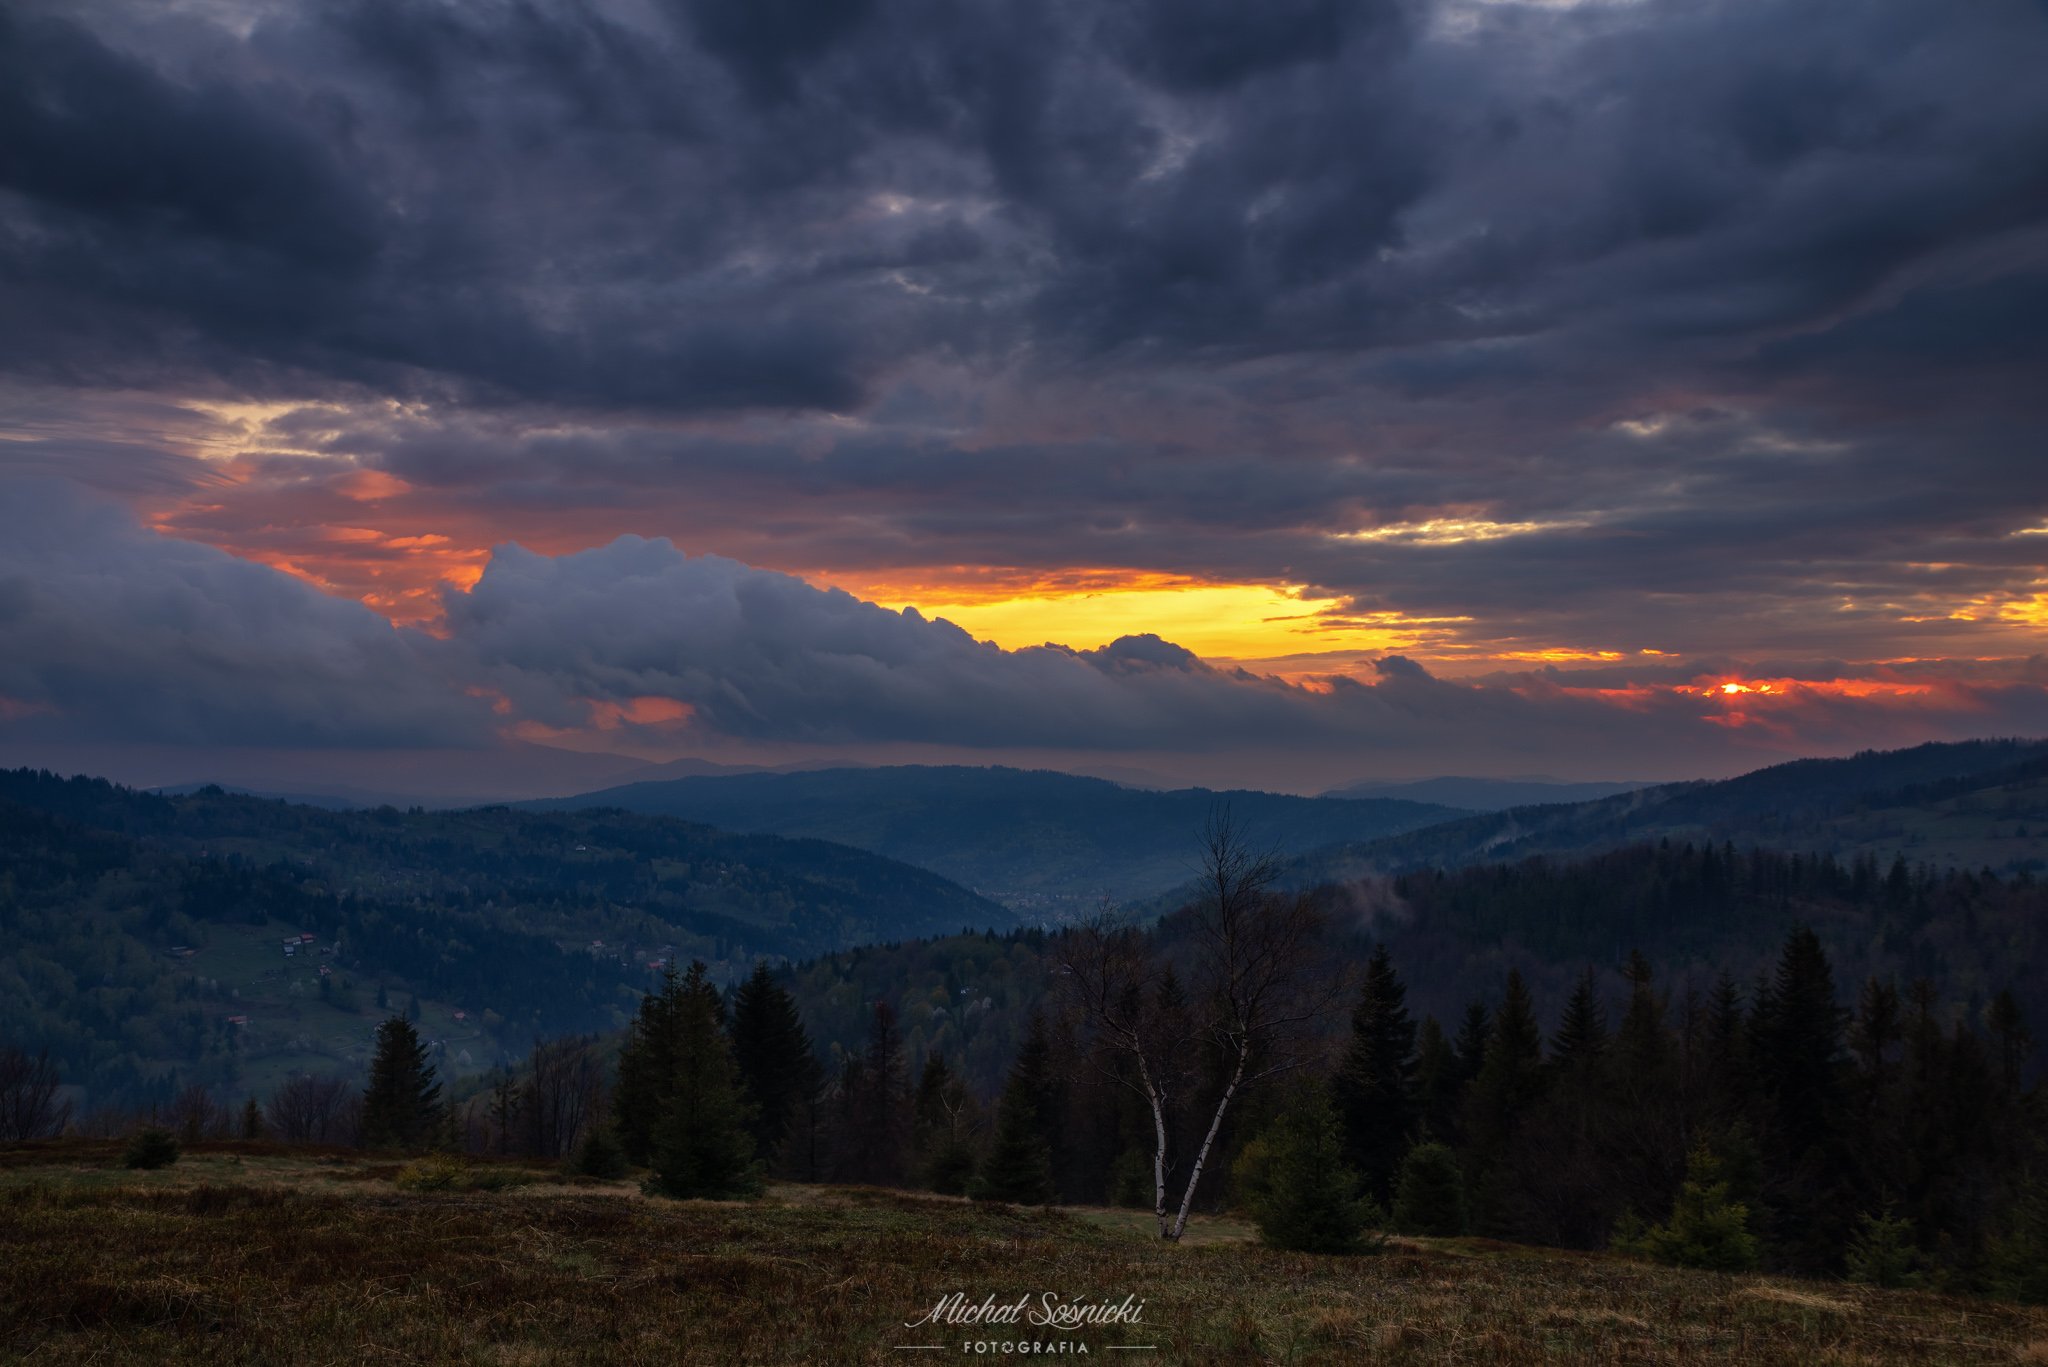 #cloudy #sunset #dangerous #landscape #sky #nature #amazing #rain #pentax, Michał Sośnicki